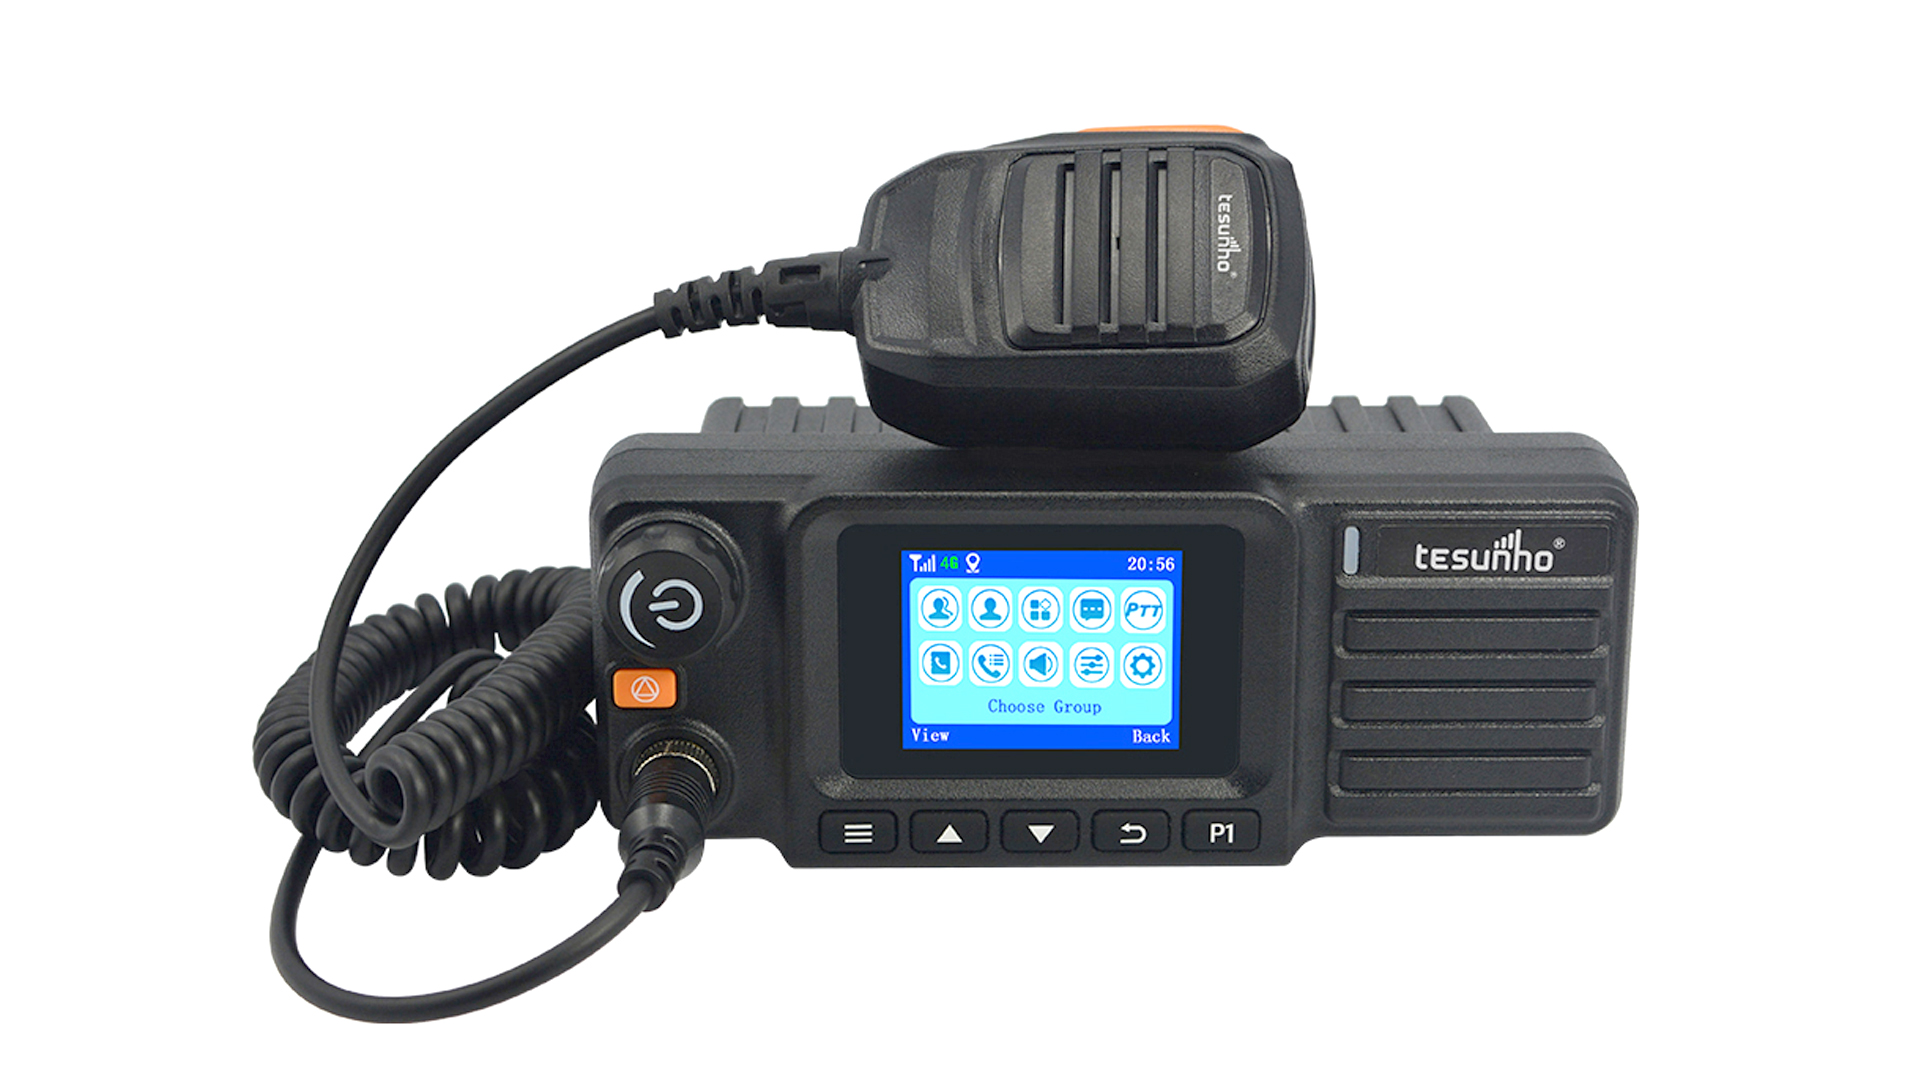 TM-990 walkie talkie 5 Versions for different demands